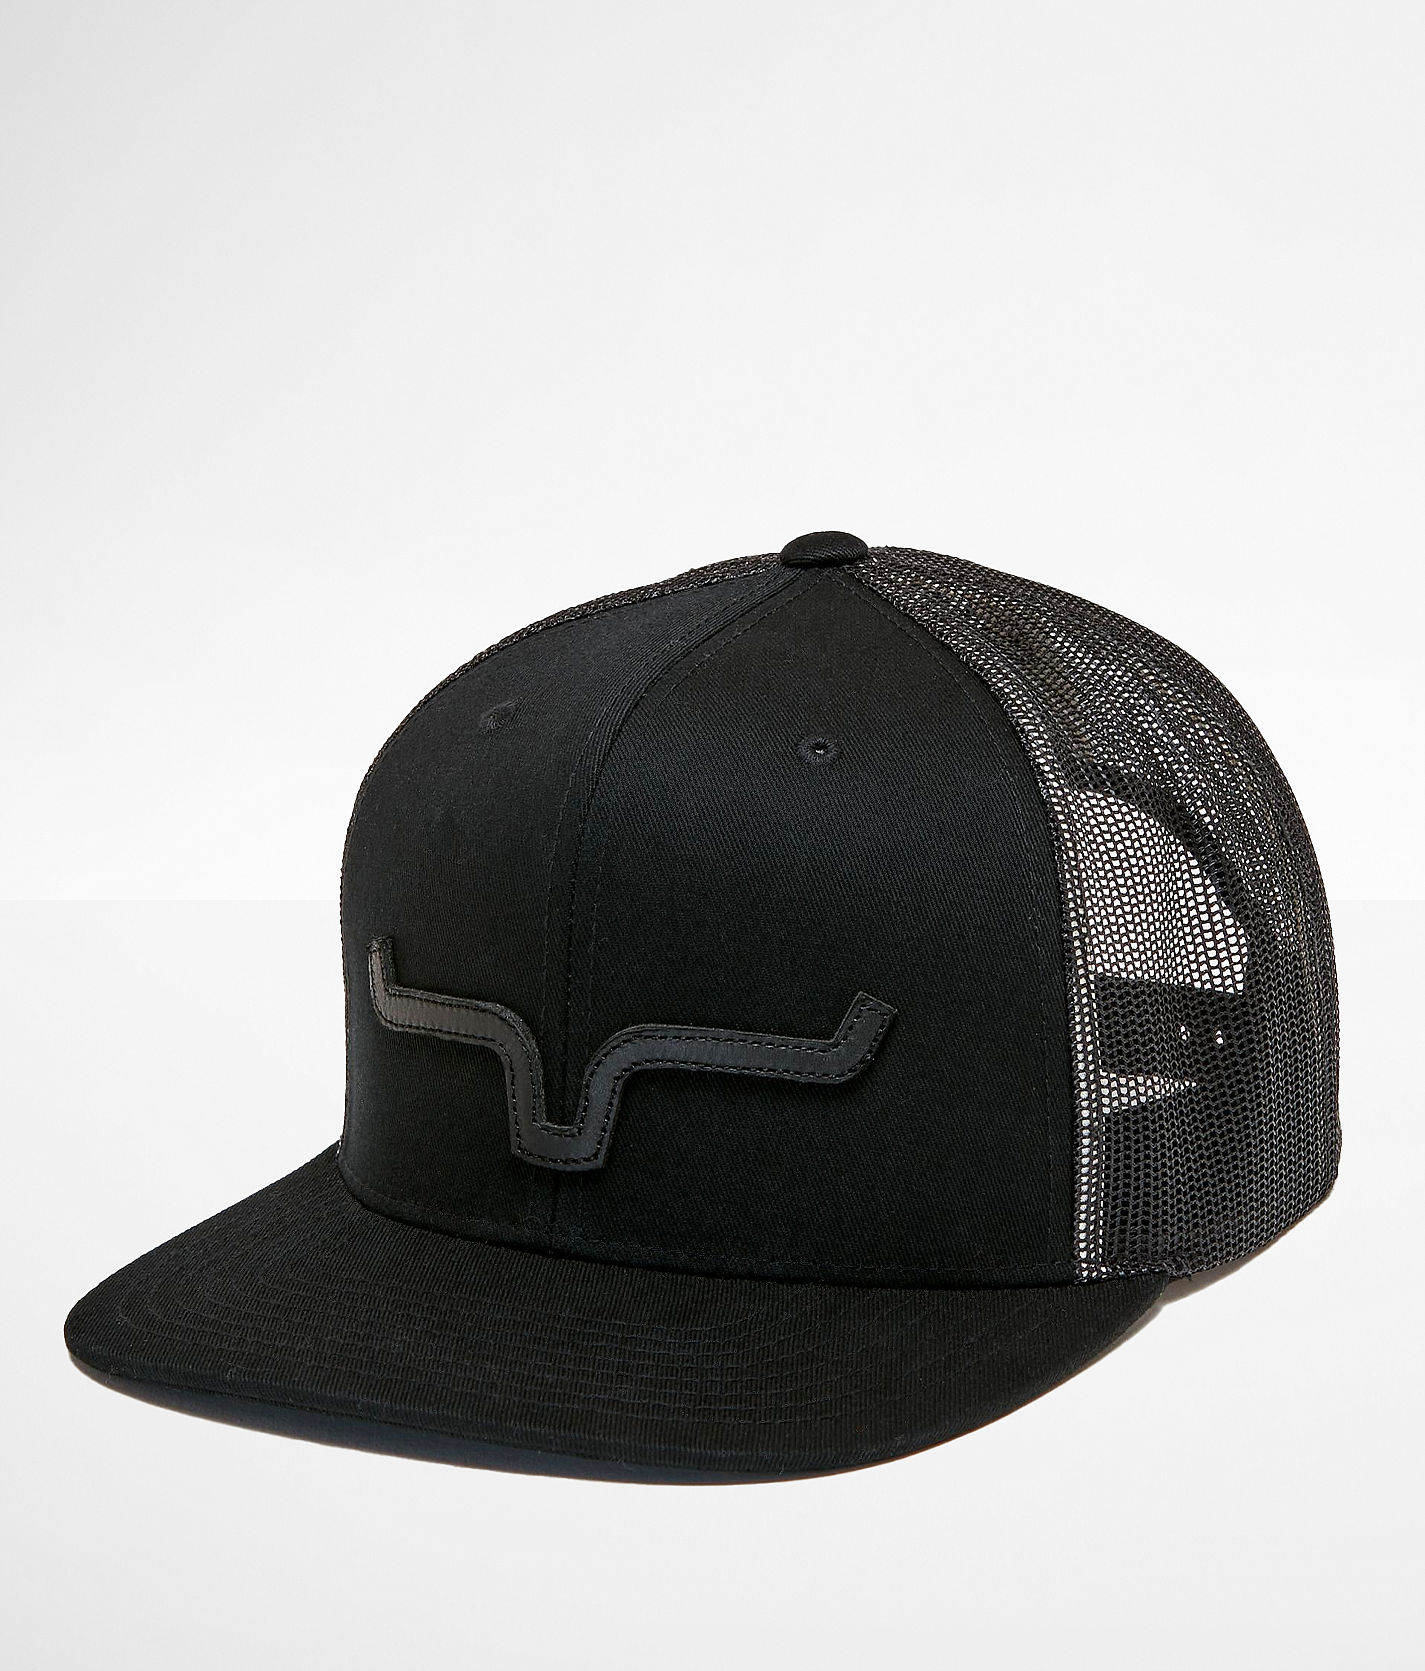 Kimes Ranch ATG Trucker Hat - Men's Hats in Black | Buckle